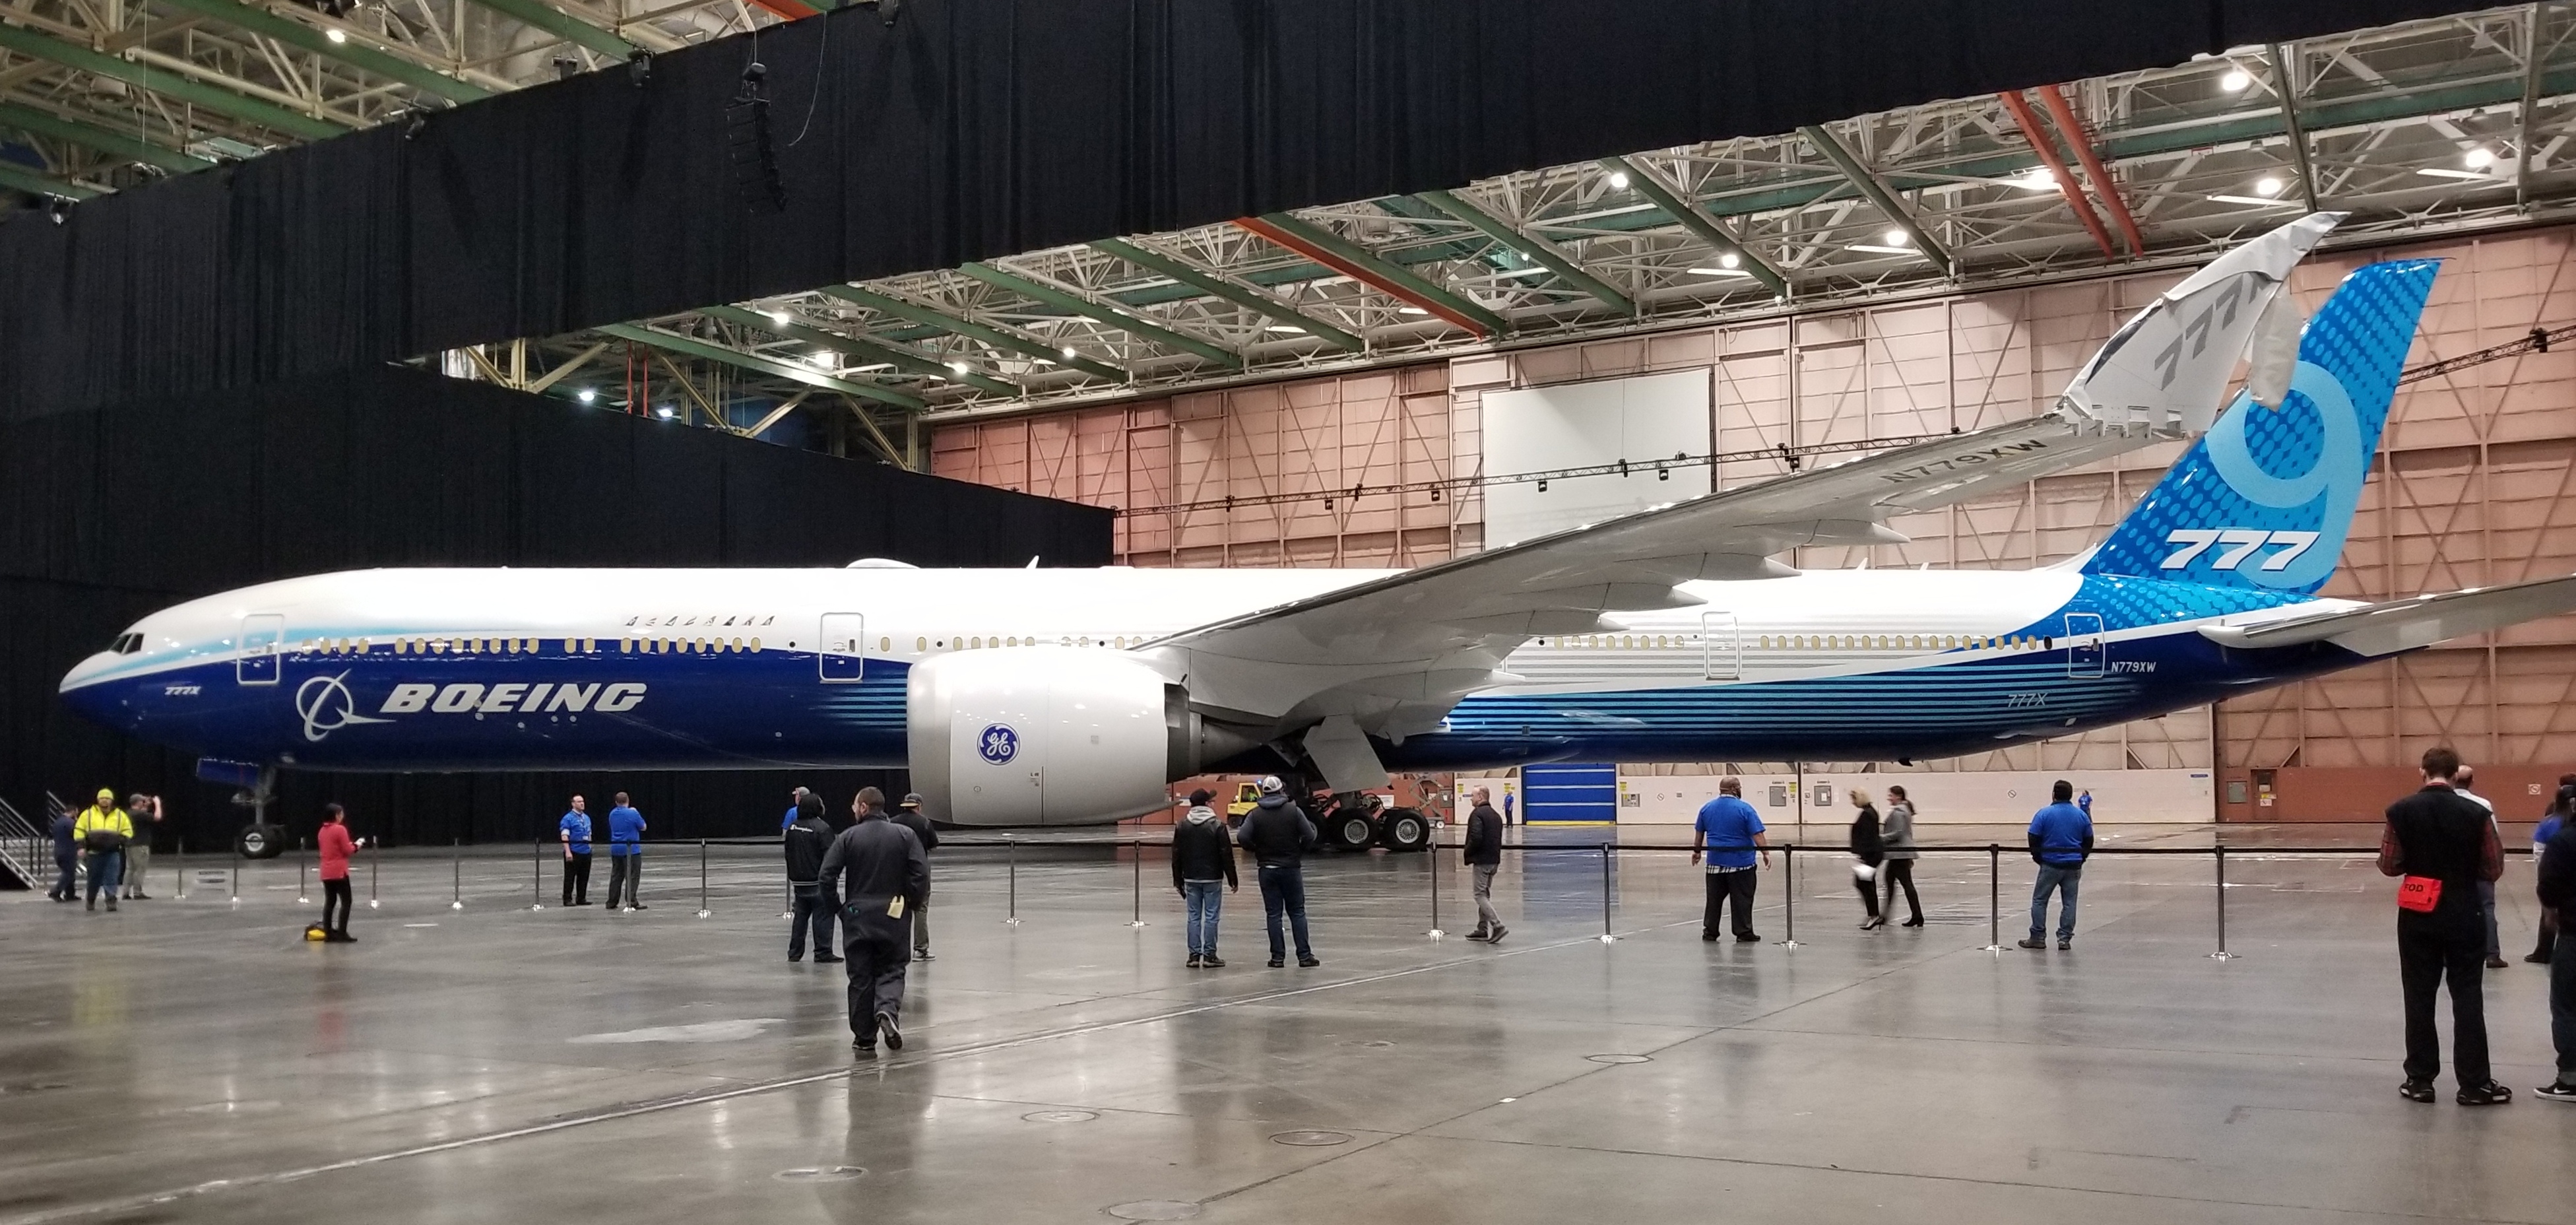 Boeing 777X - Wikipedia